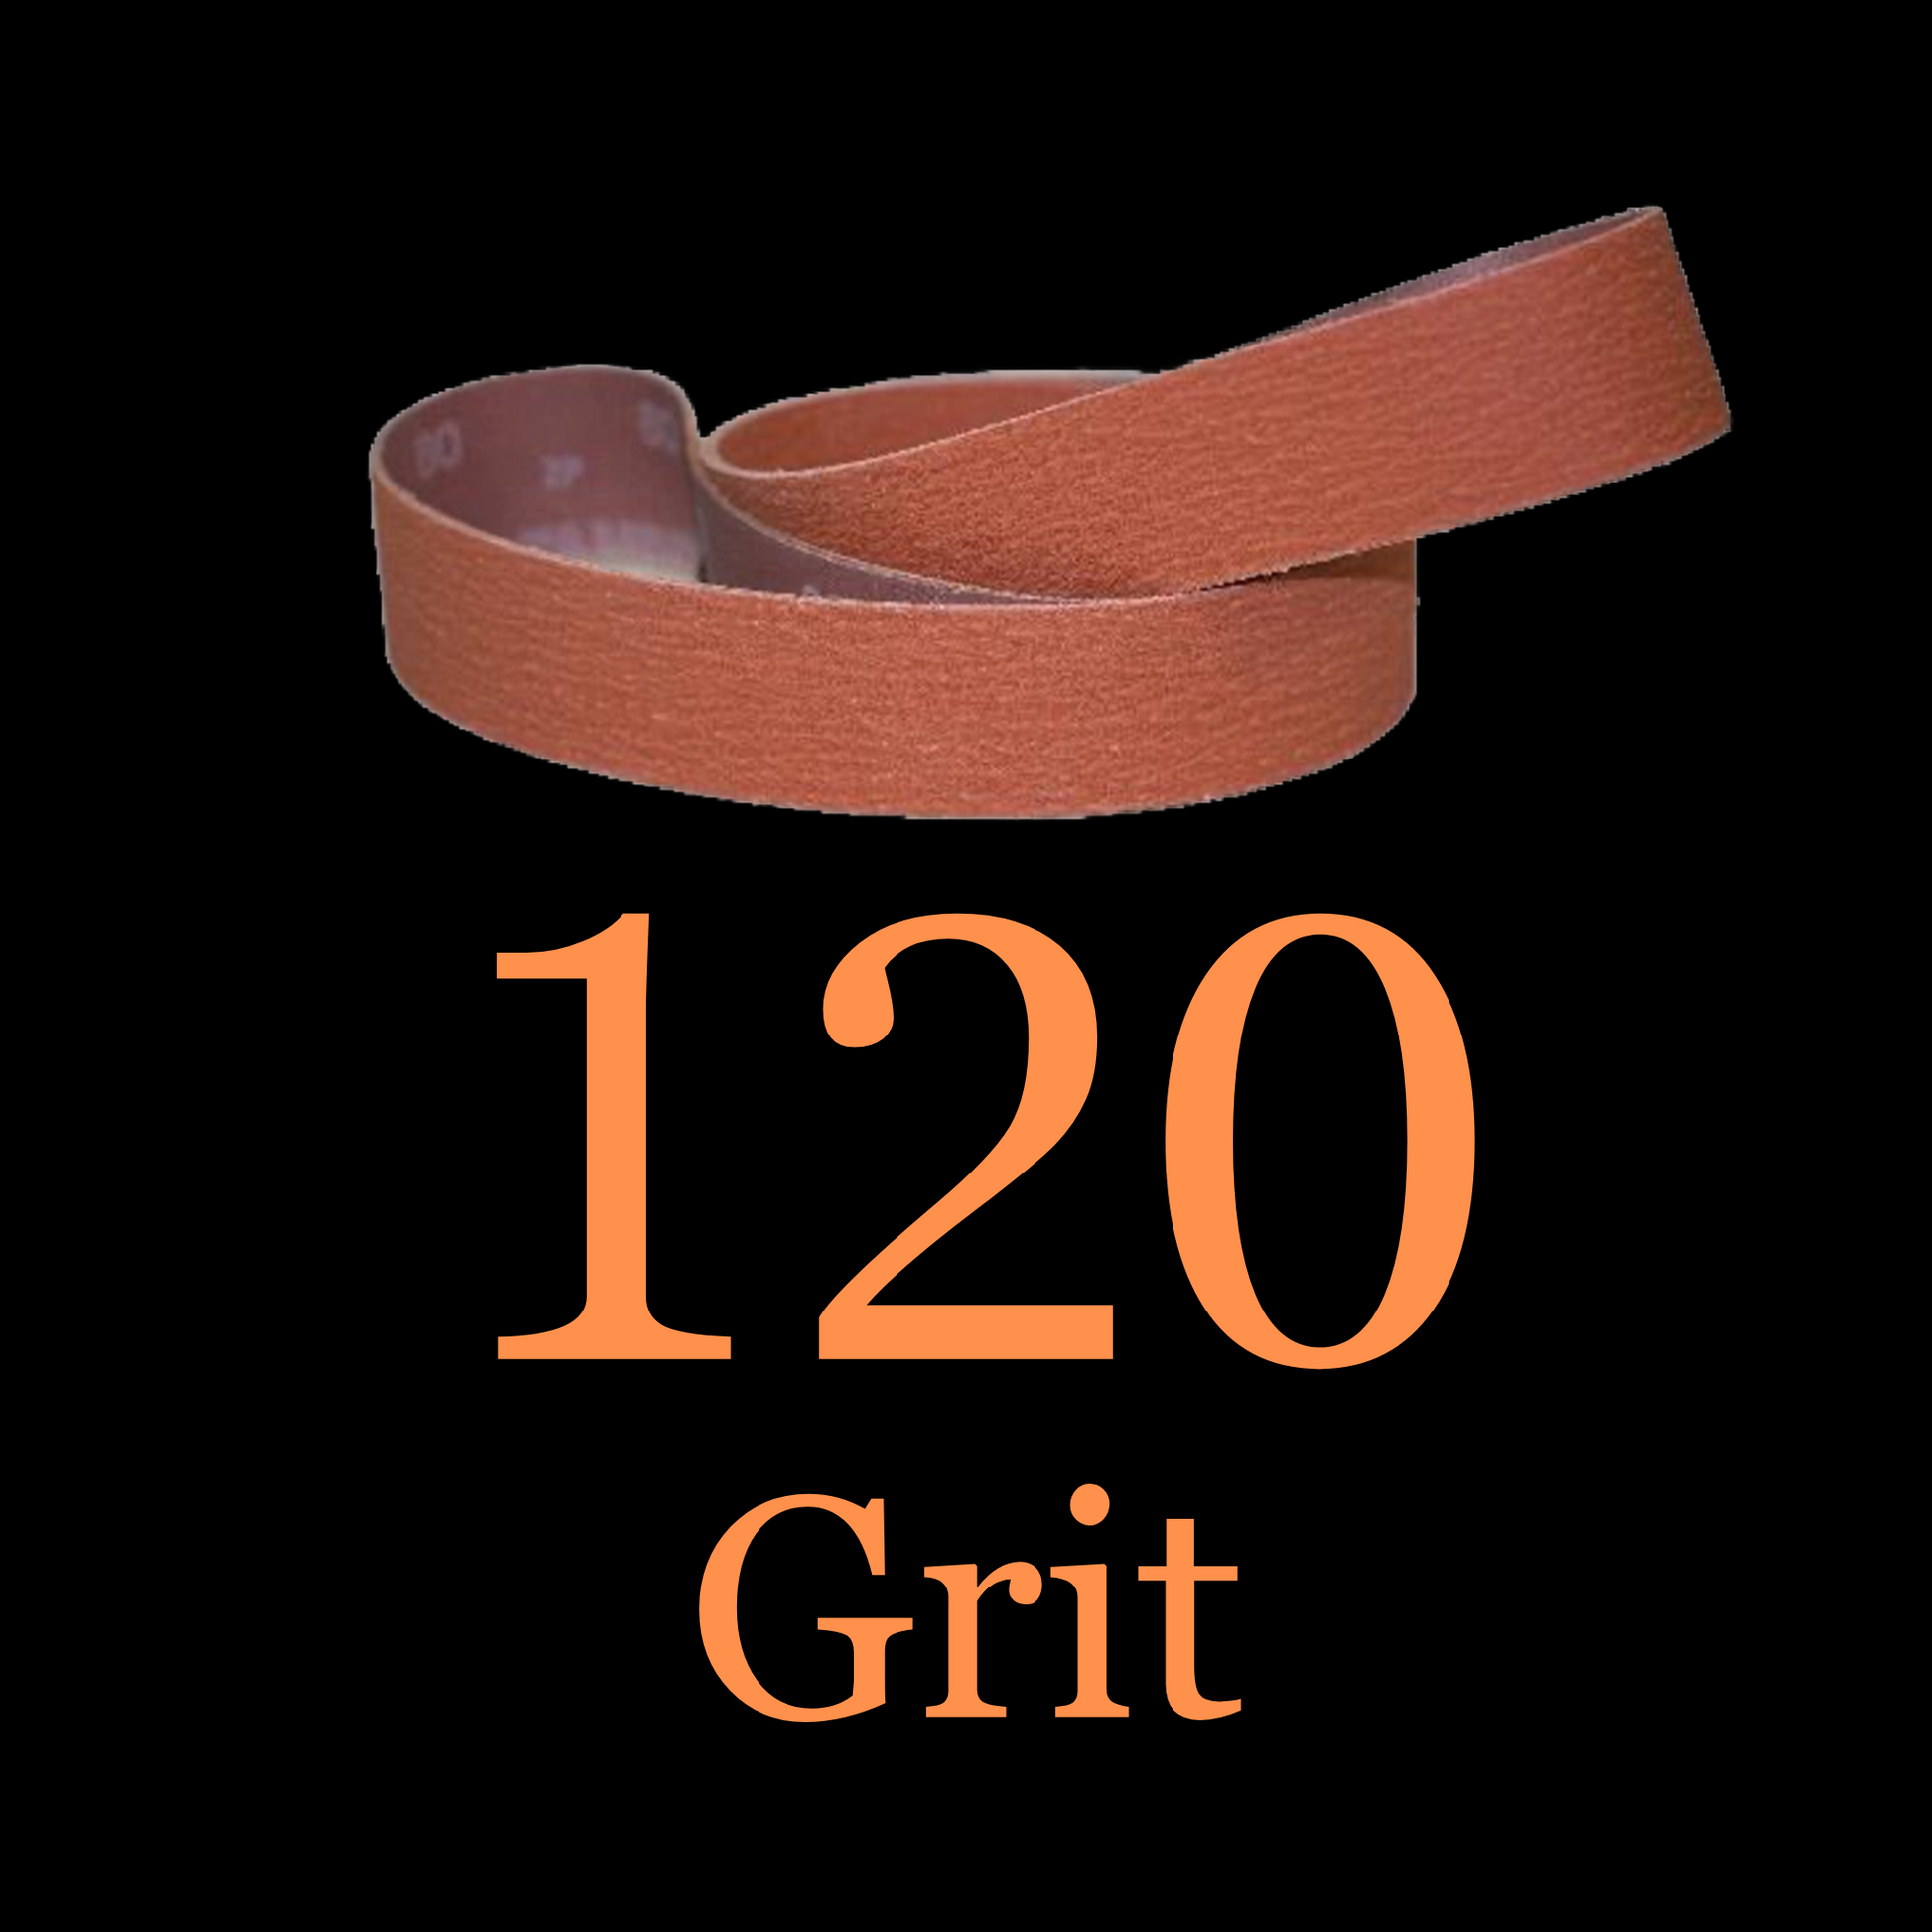 4” x 36” Blaze Premium Ceramic Belts 120 Grit